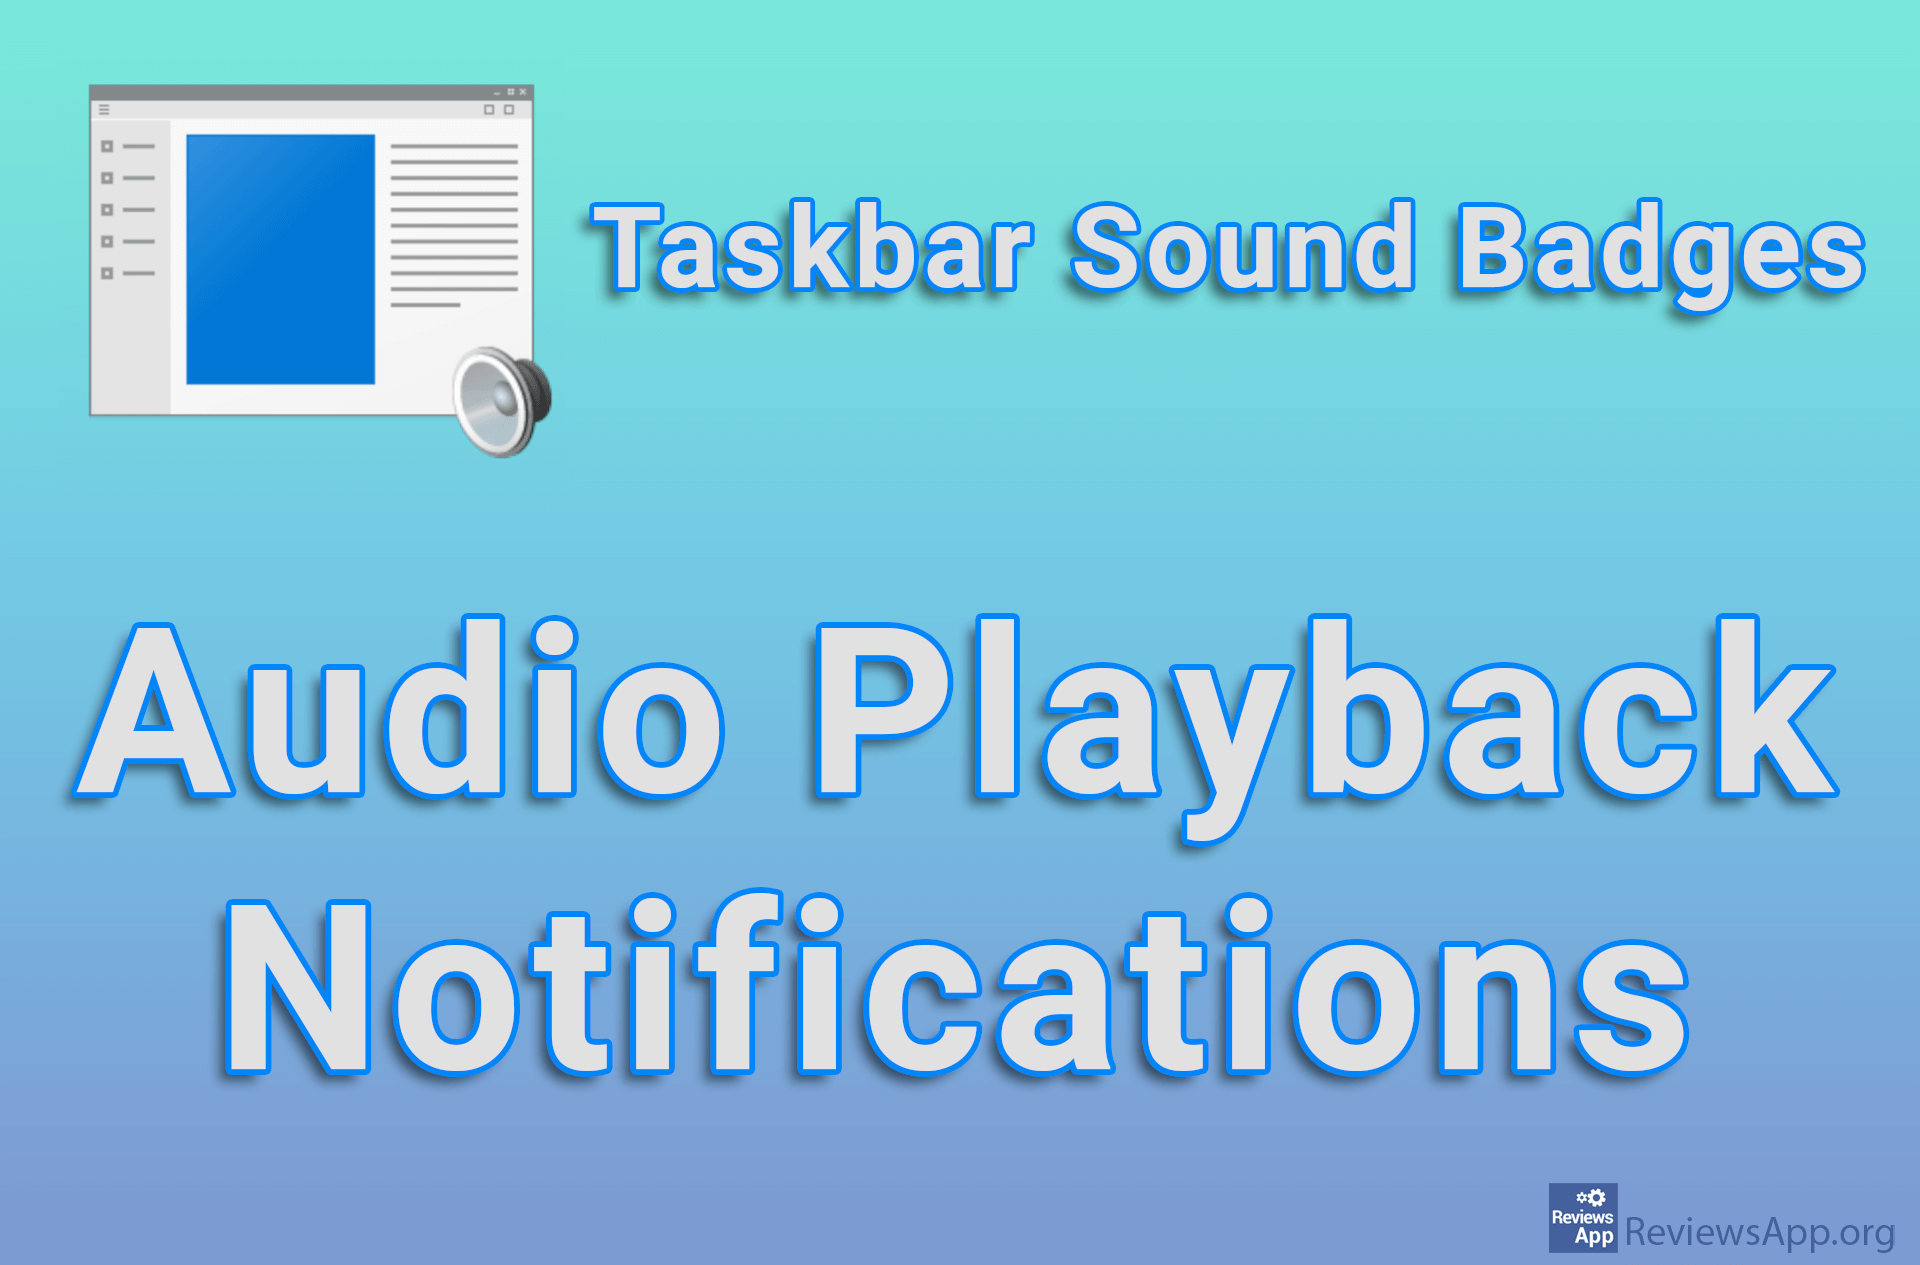 Taskbar Sound Badges – Audio Playback Notifications